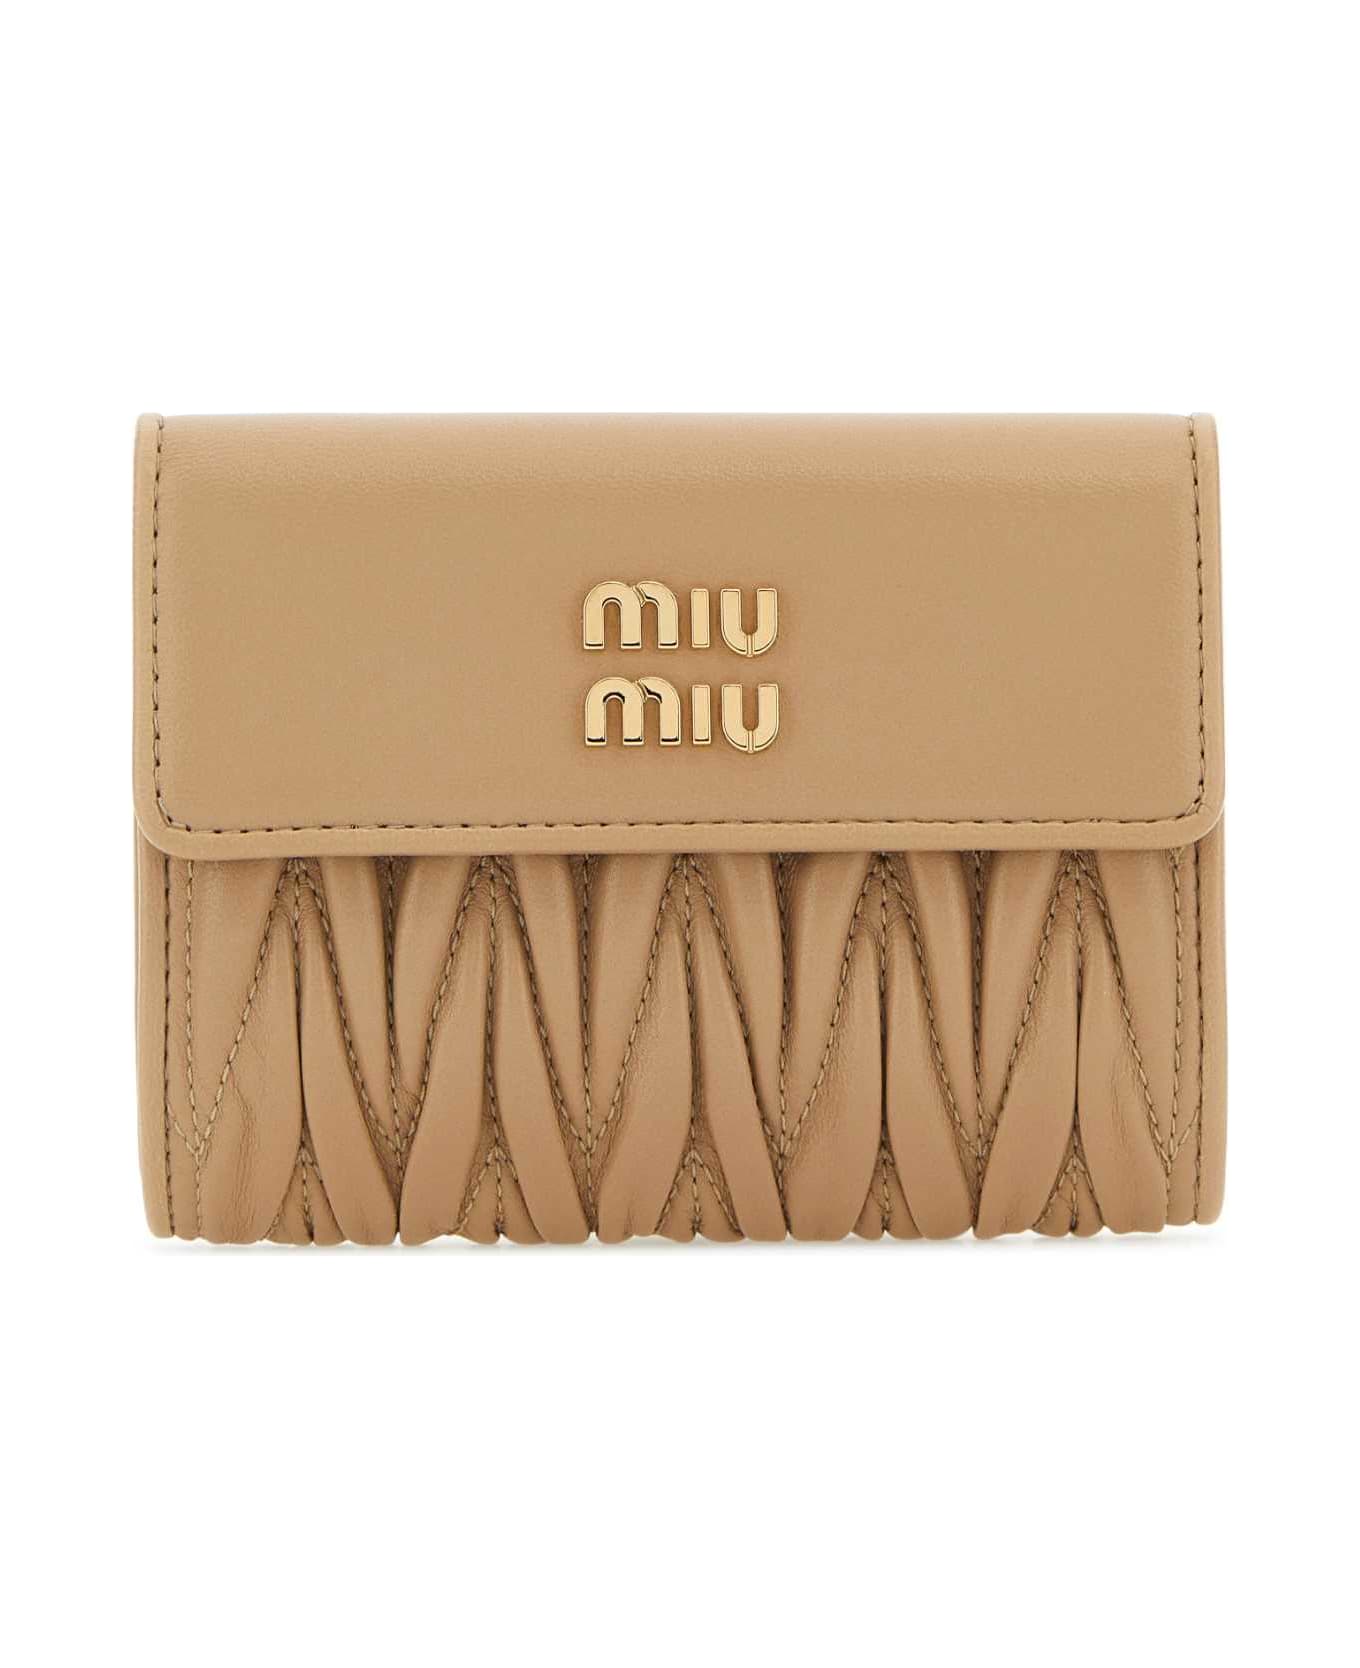 Miu Miu Sand Leather Wallet - SABBIA